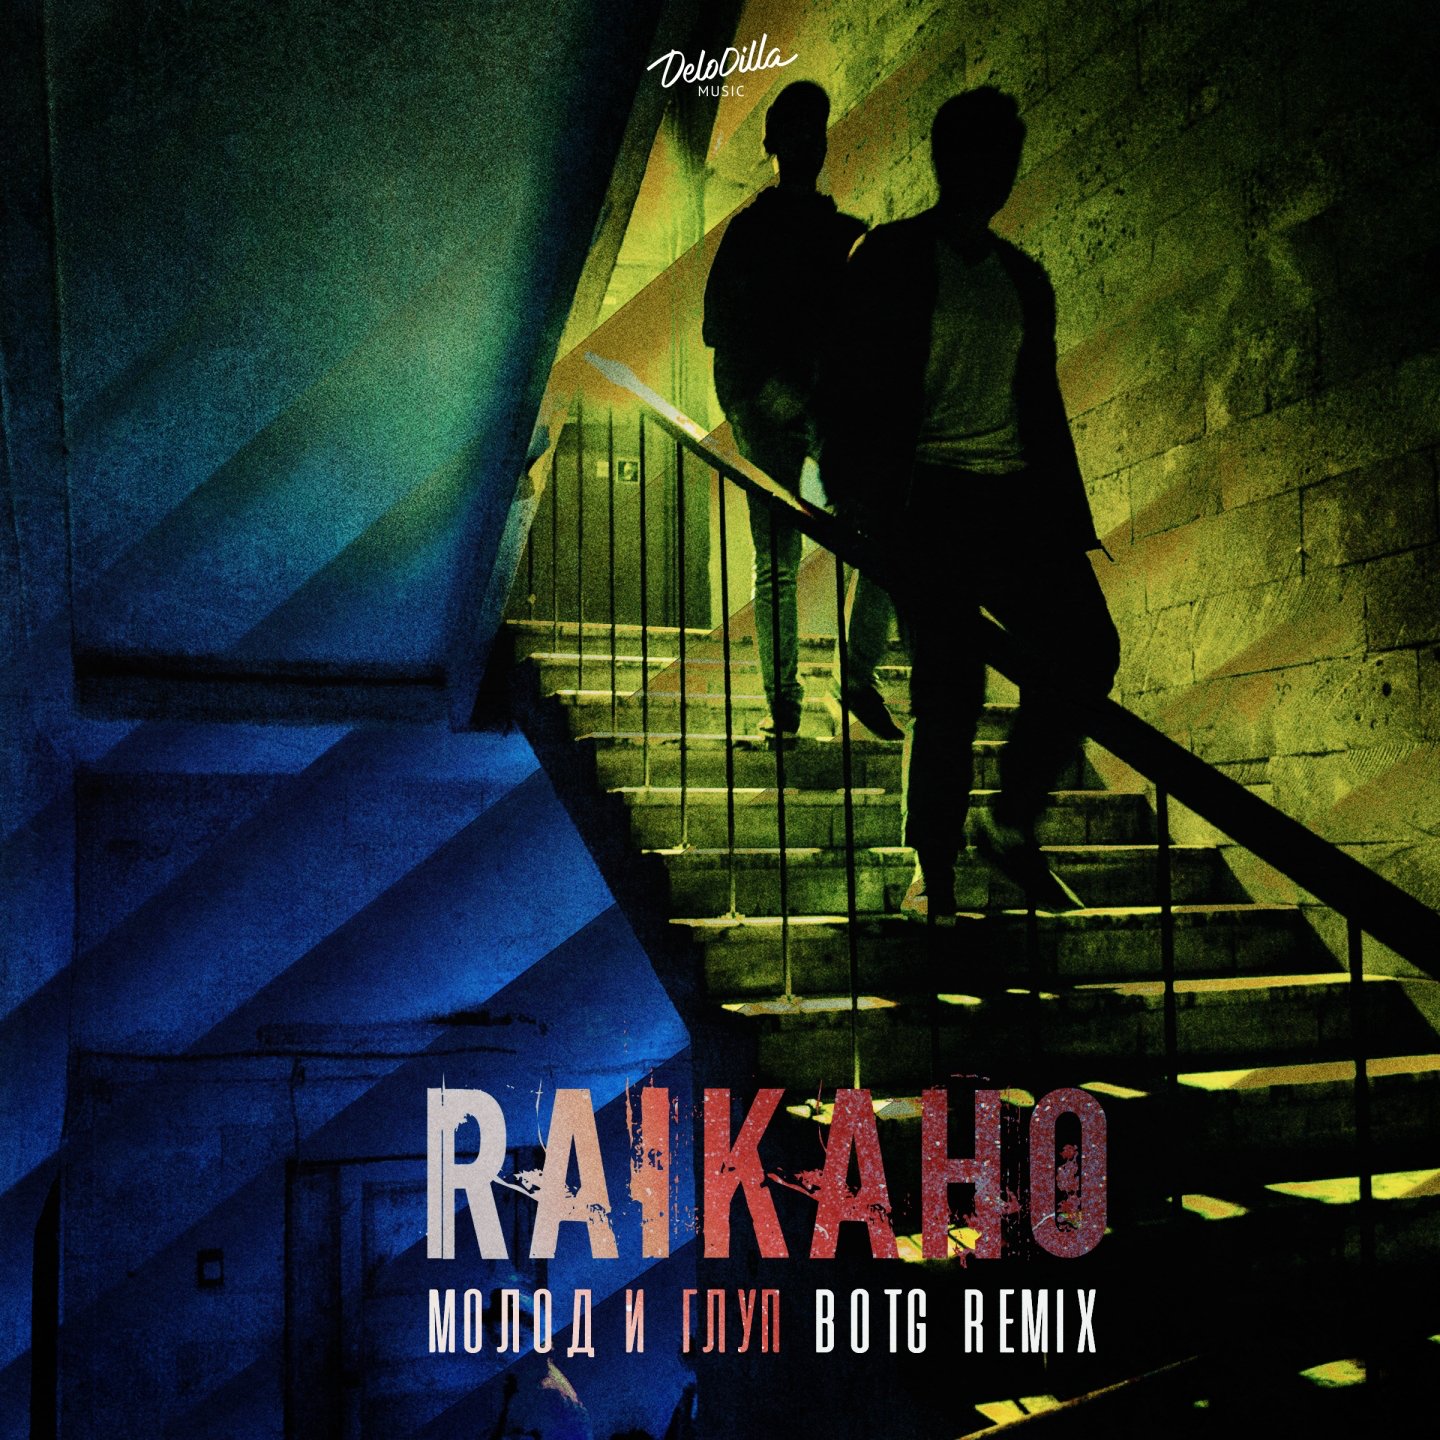 Raikaho молод и глуп. Молод и глуп raikaho. Молод и глуп BOTG Remix. Raikaho - молод и глуп (BOTG Remix). Raikaho певец.